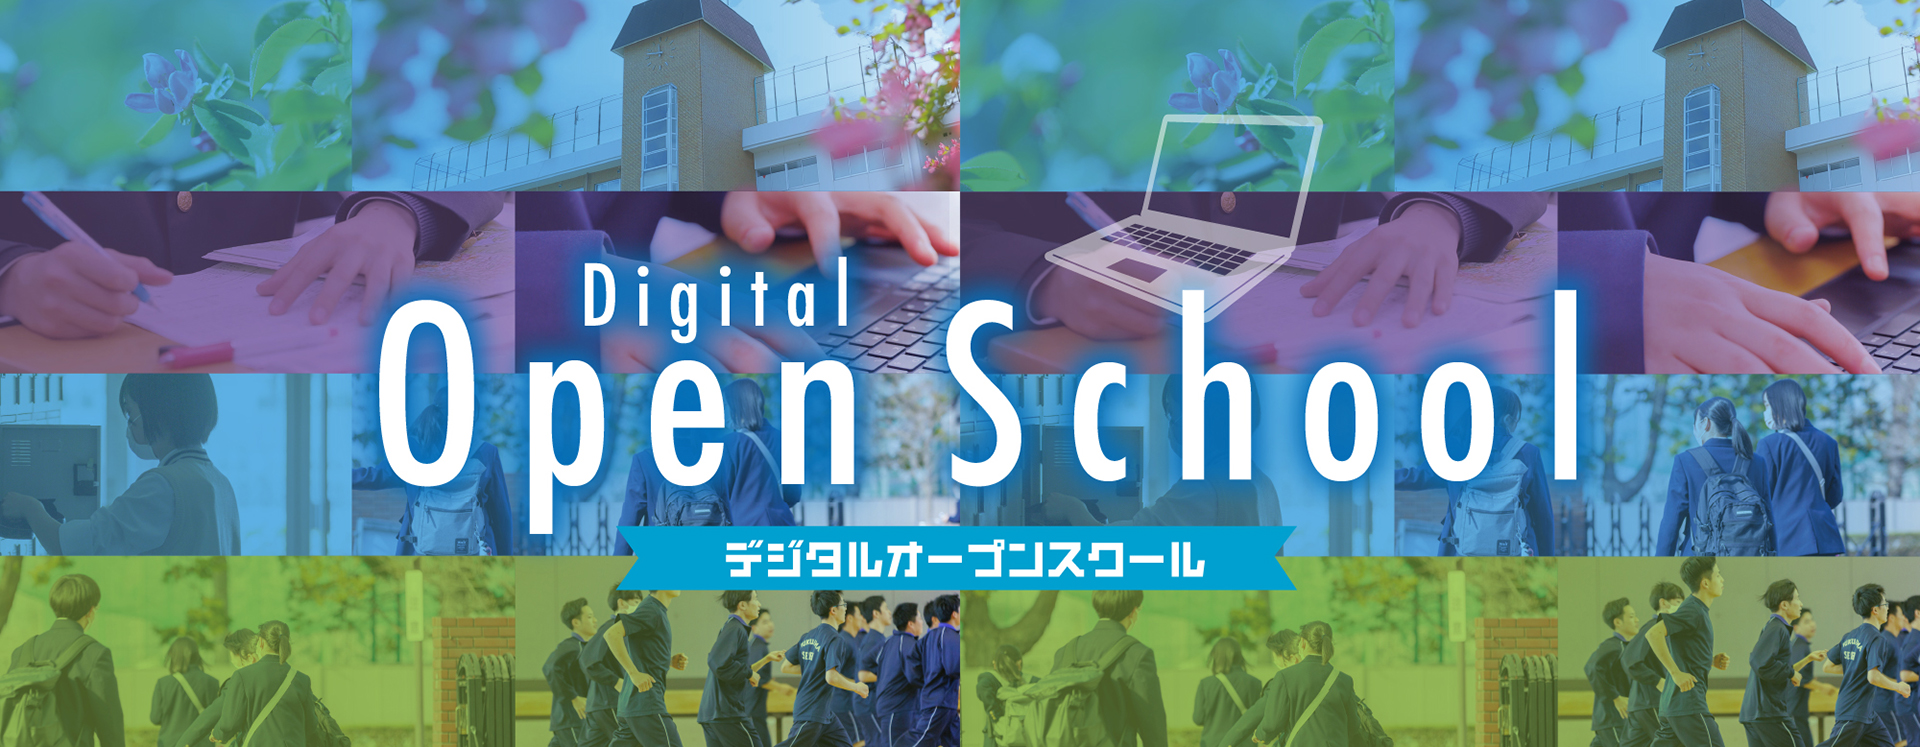 Open School 2021 デジタルオープンスクール